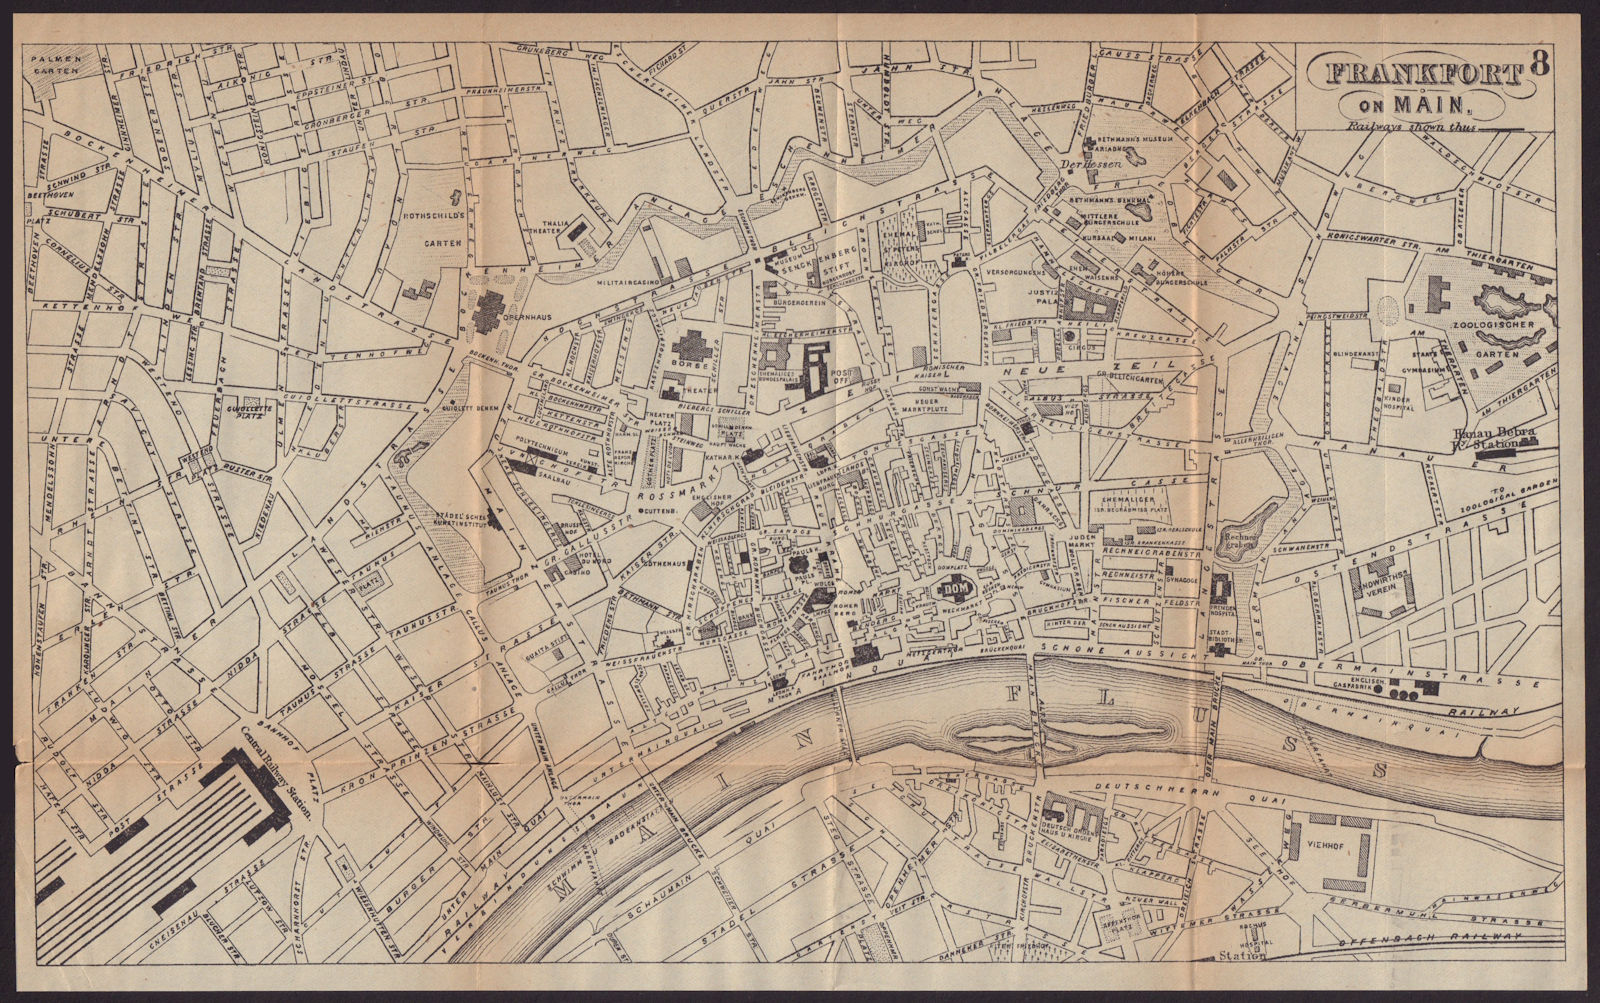 FRANKFURT AM MAIN antique town plan city map. Germany. BRADSHAW c1898 old